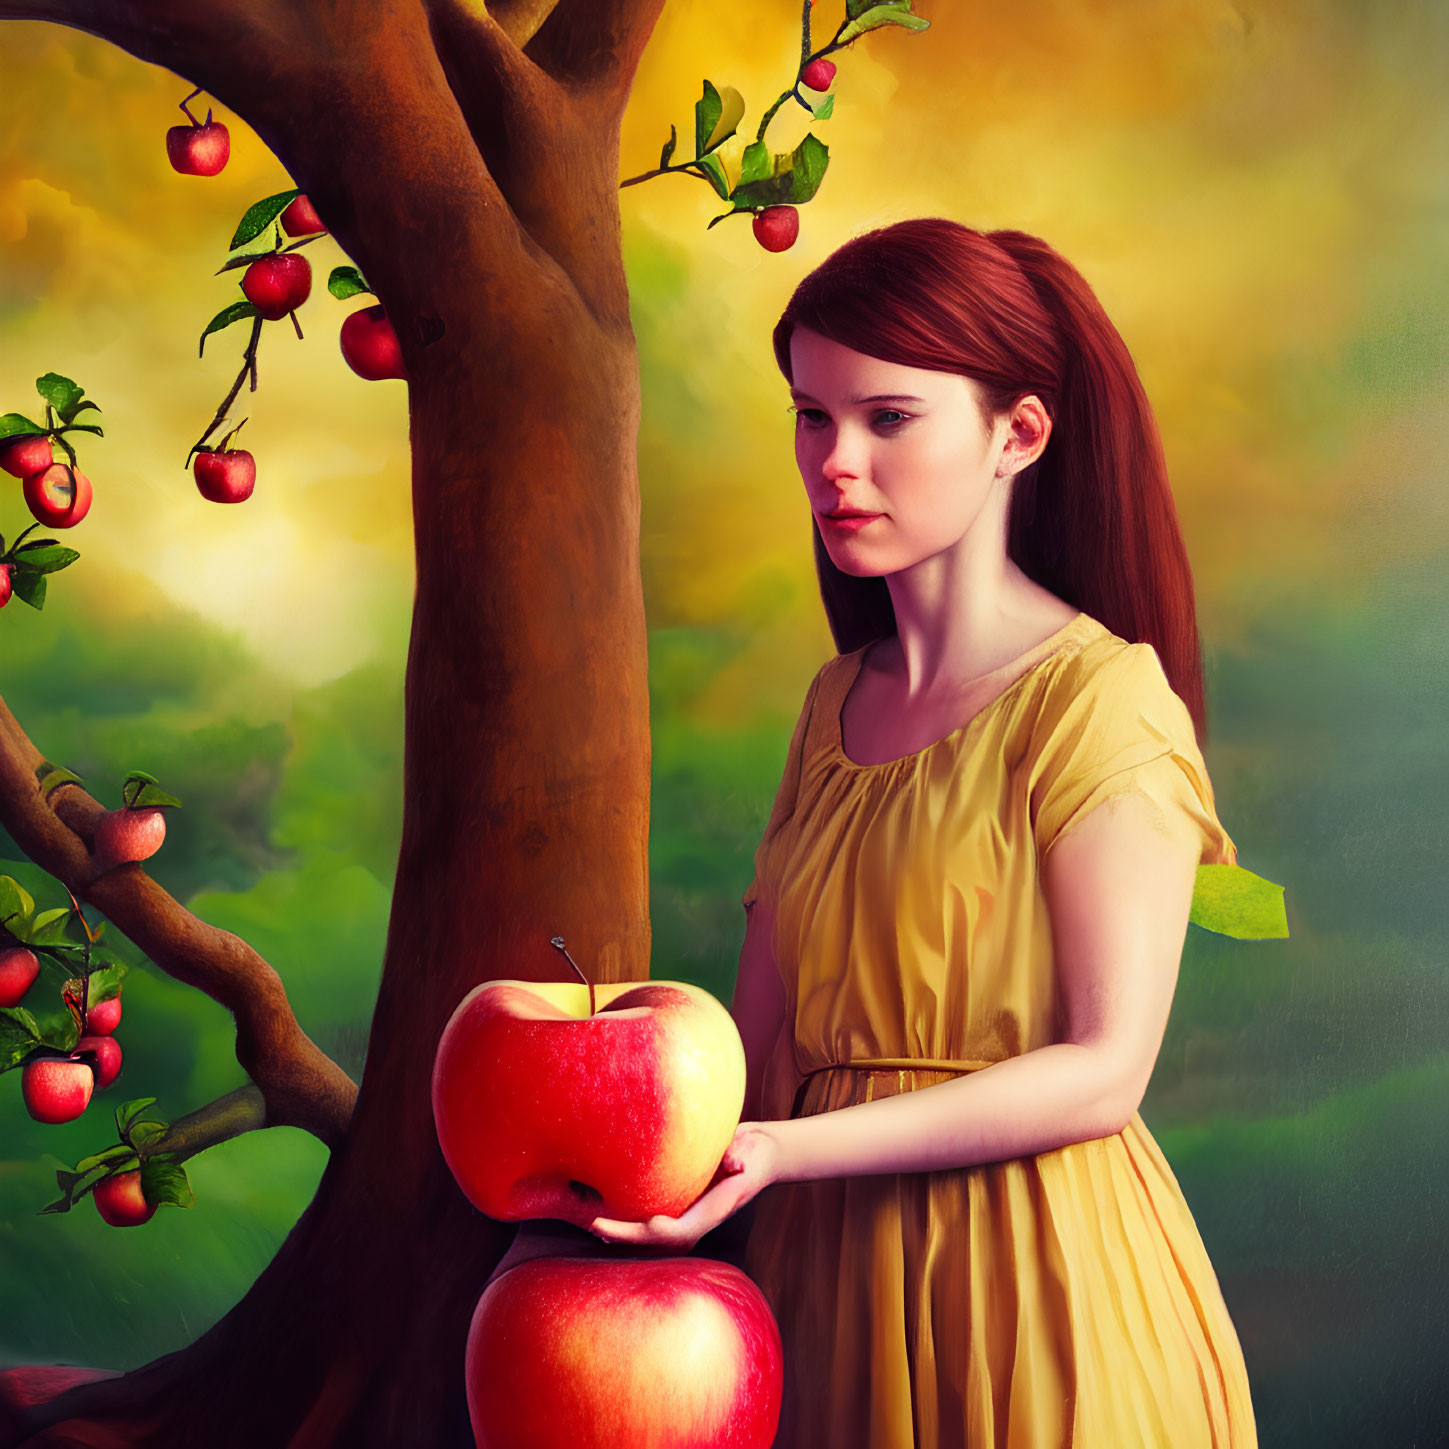 Woman in Yellow Dress Holding Apple by Apple Tree in Sunlight